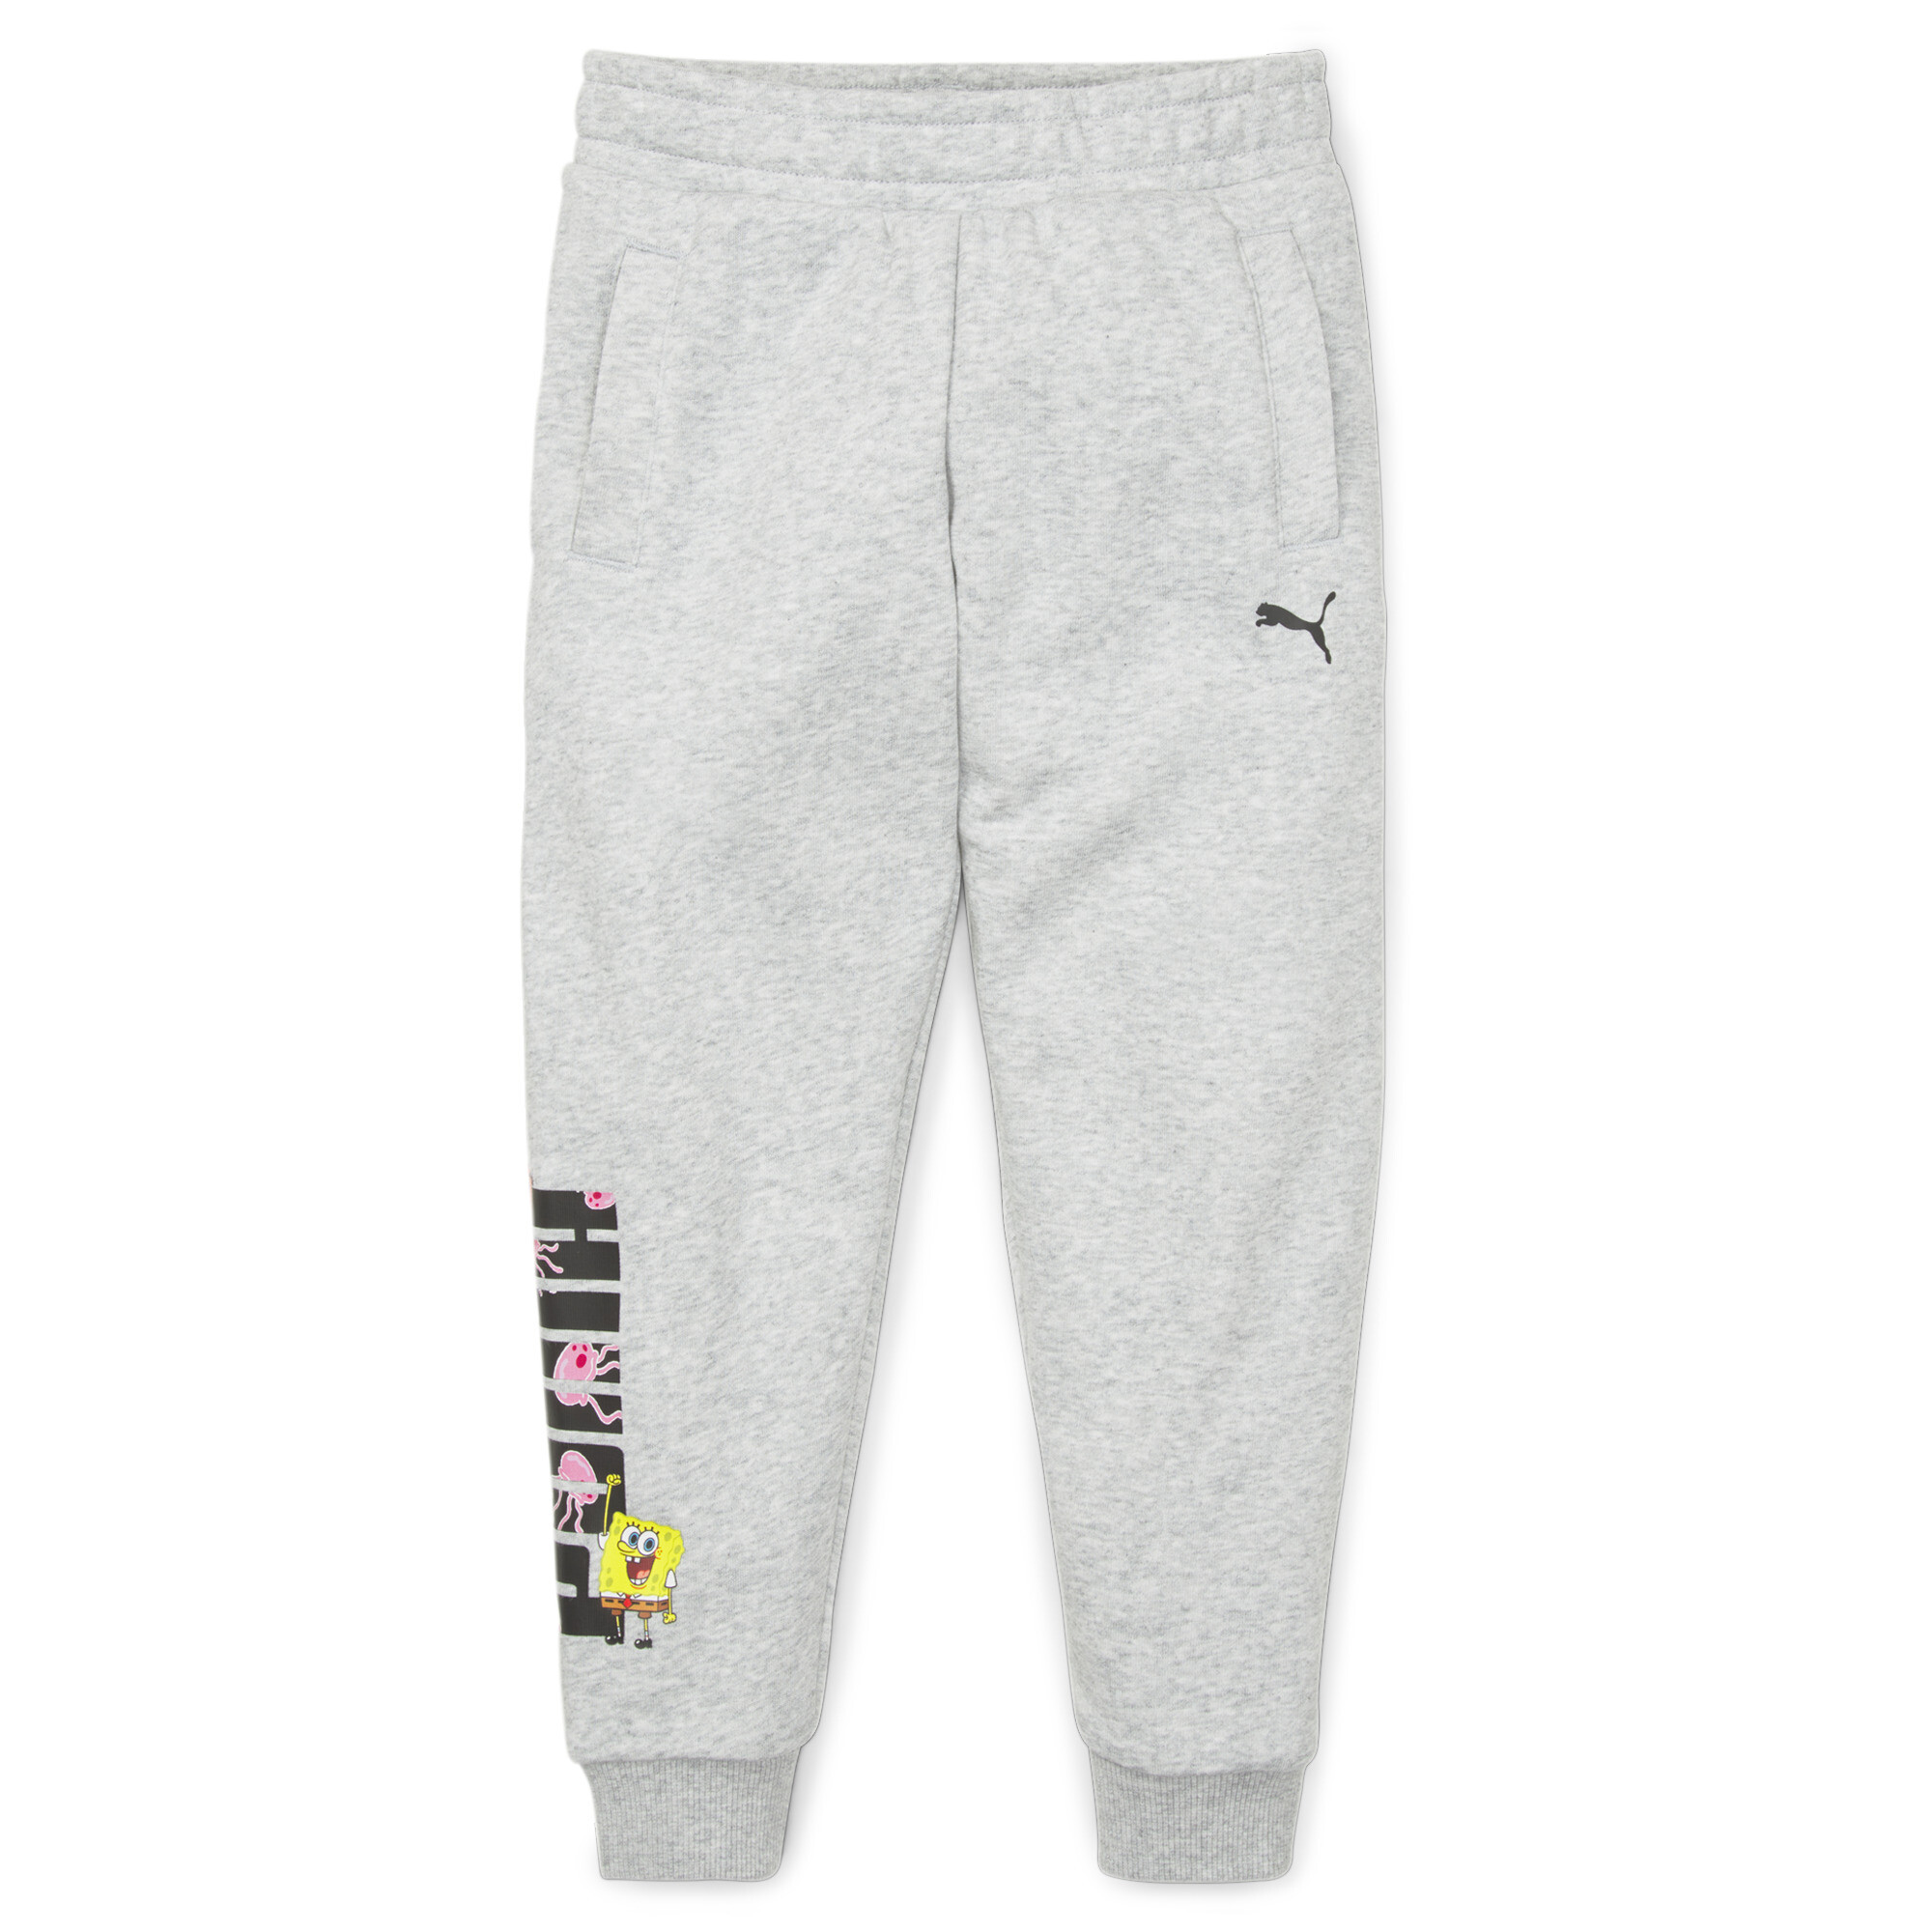 Puma X SPONGEBOB Sweatpants Kids, Gray, Size 9-10Y, Clothing